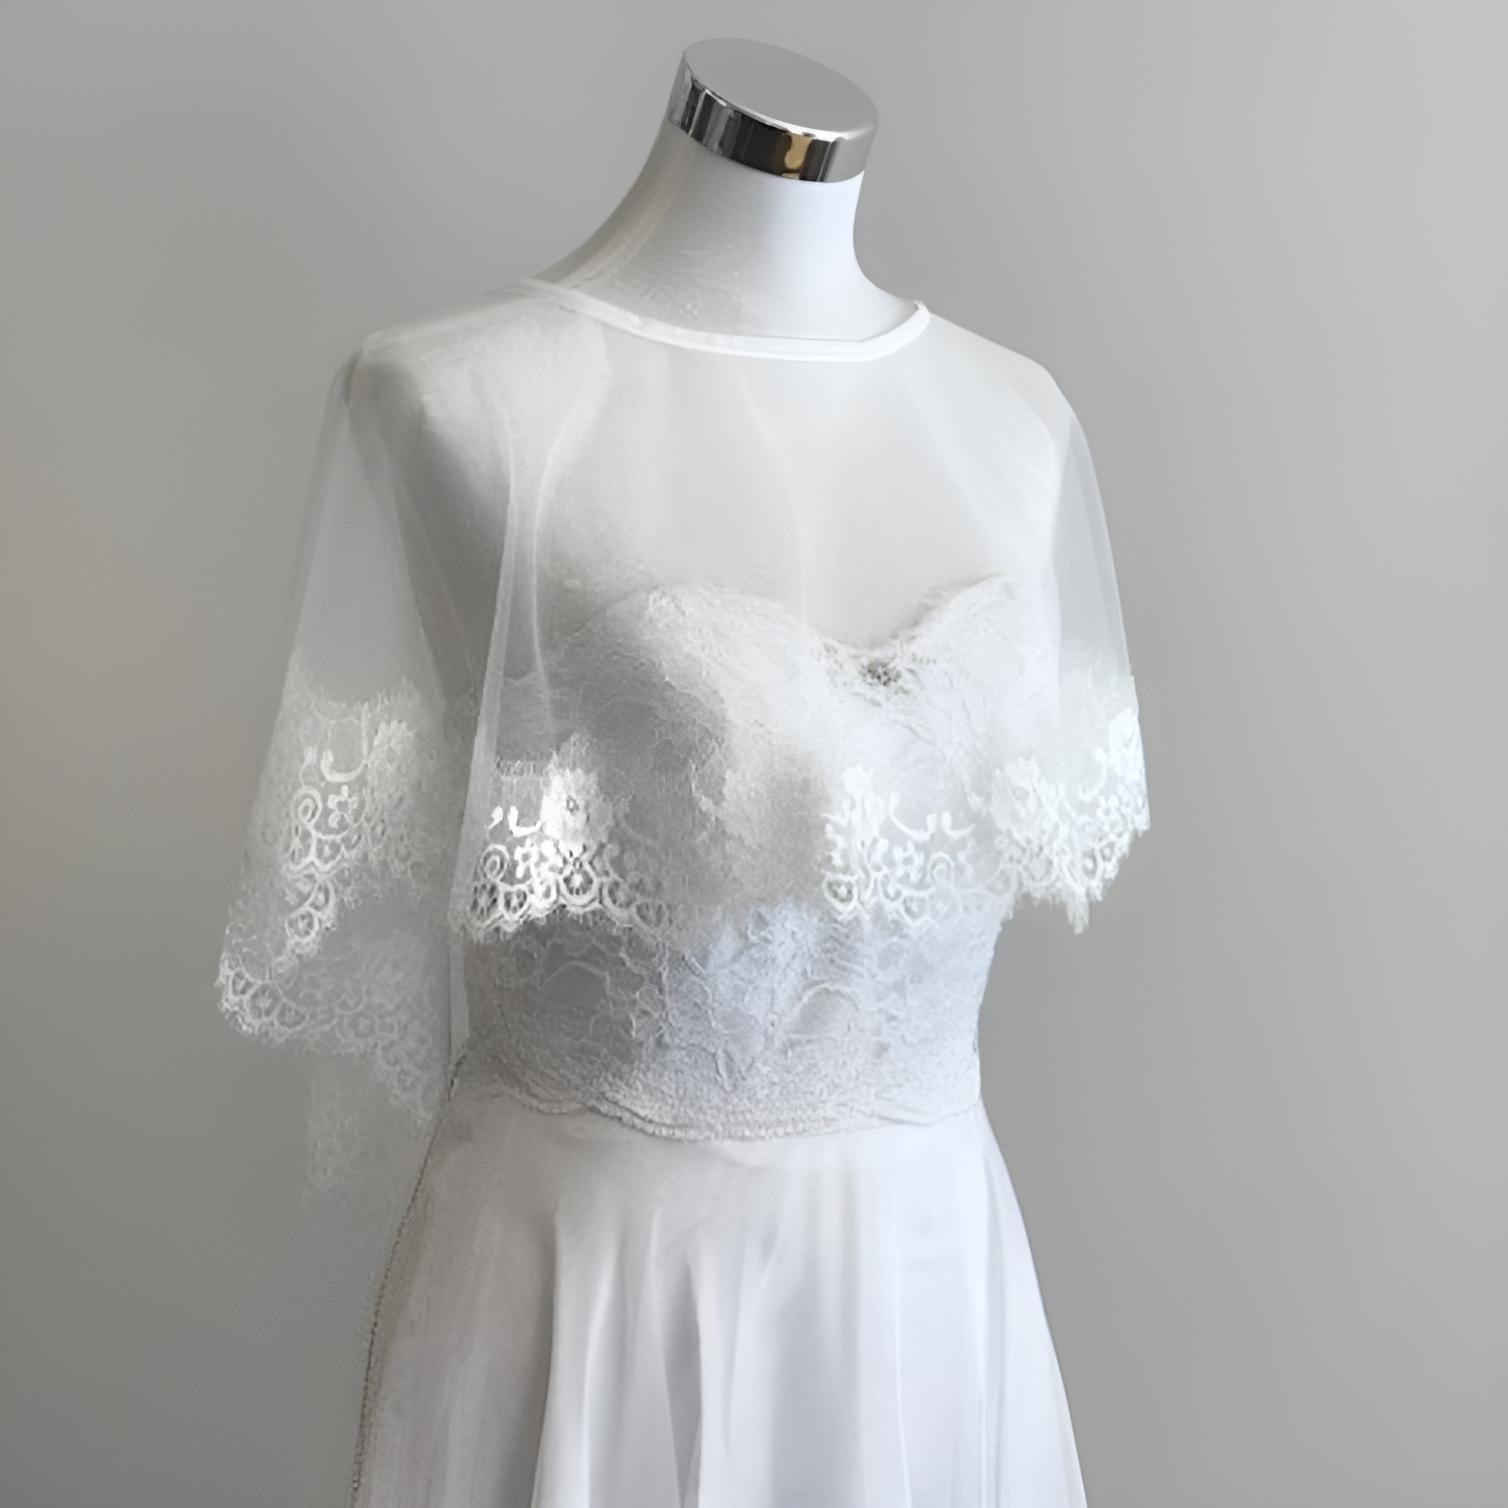 Bridal Cover Up Bolero with Lace Trim - Jacket